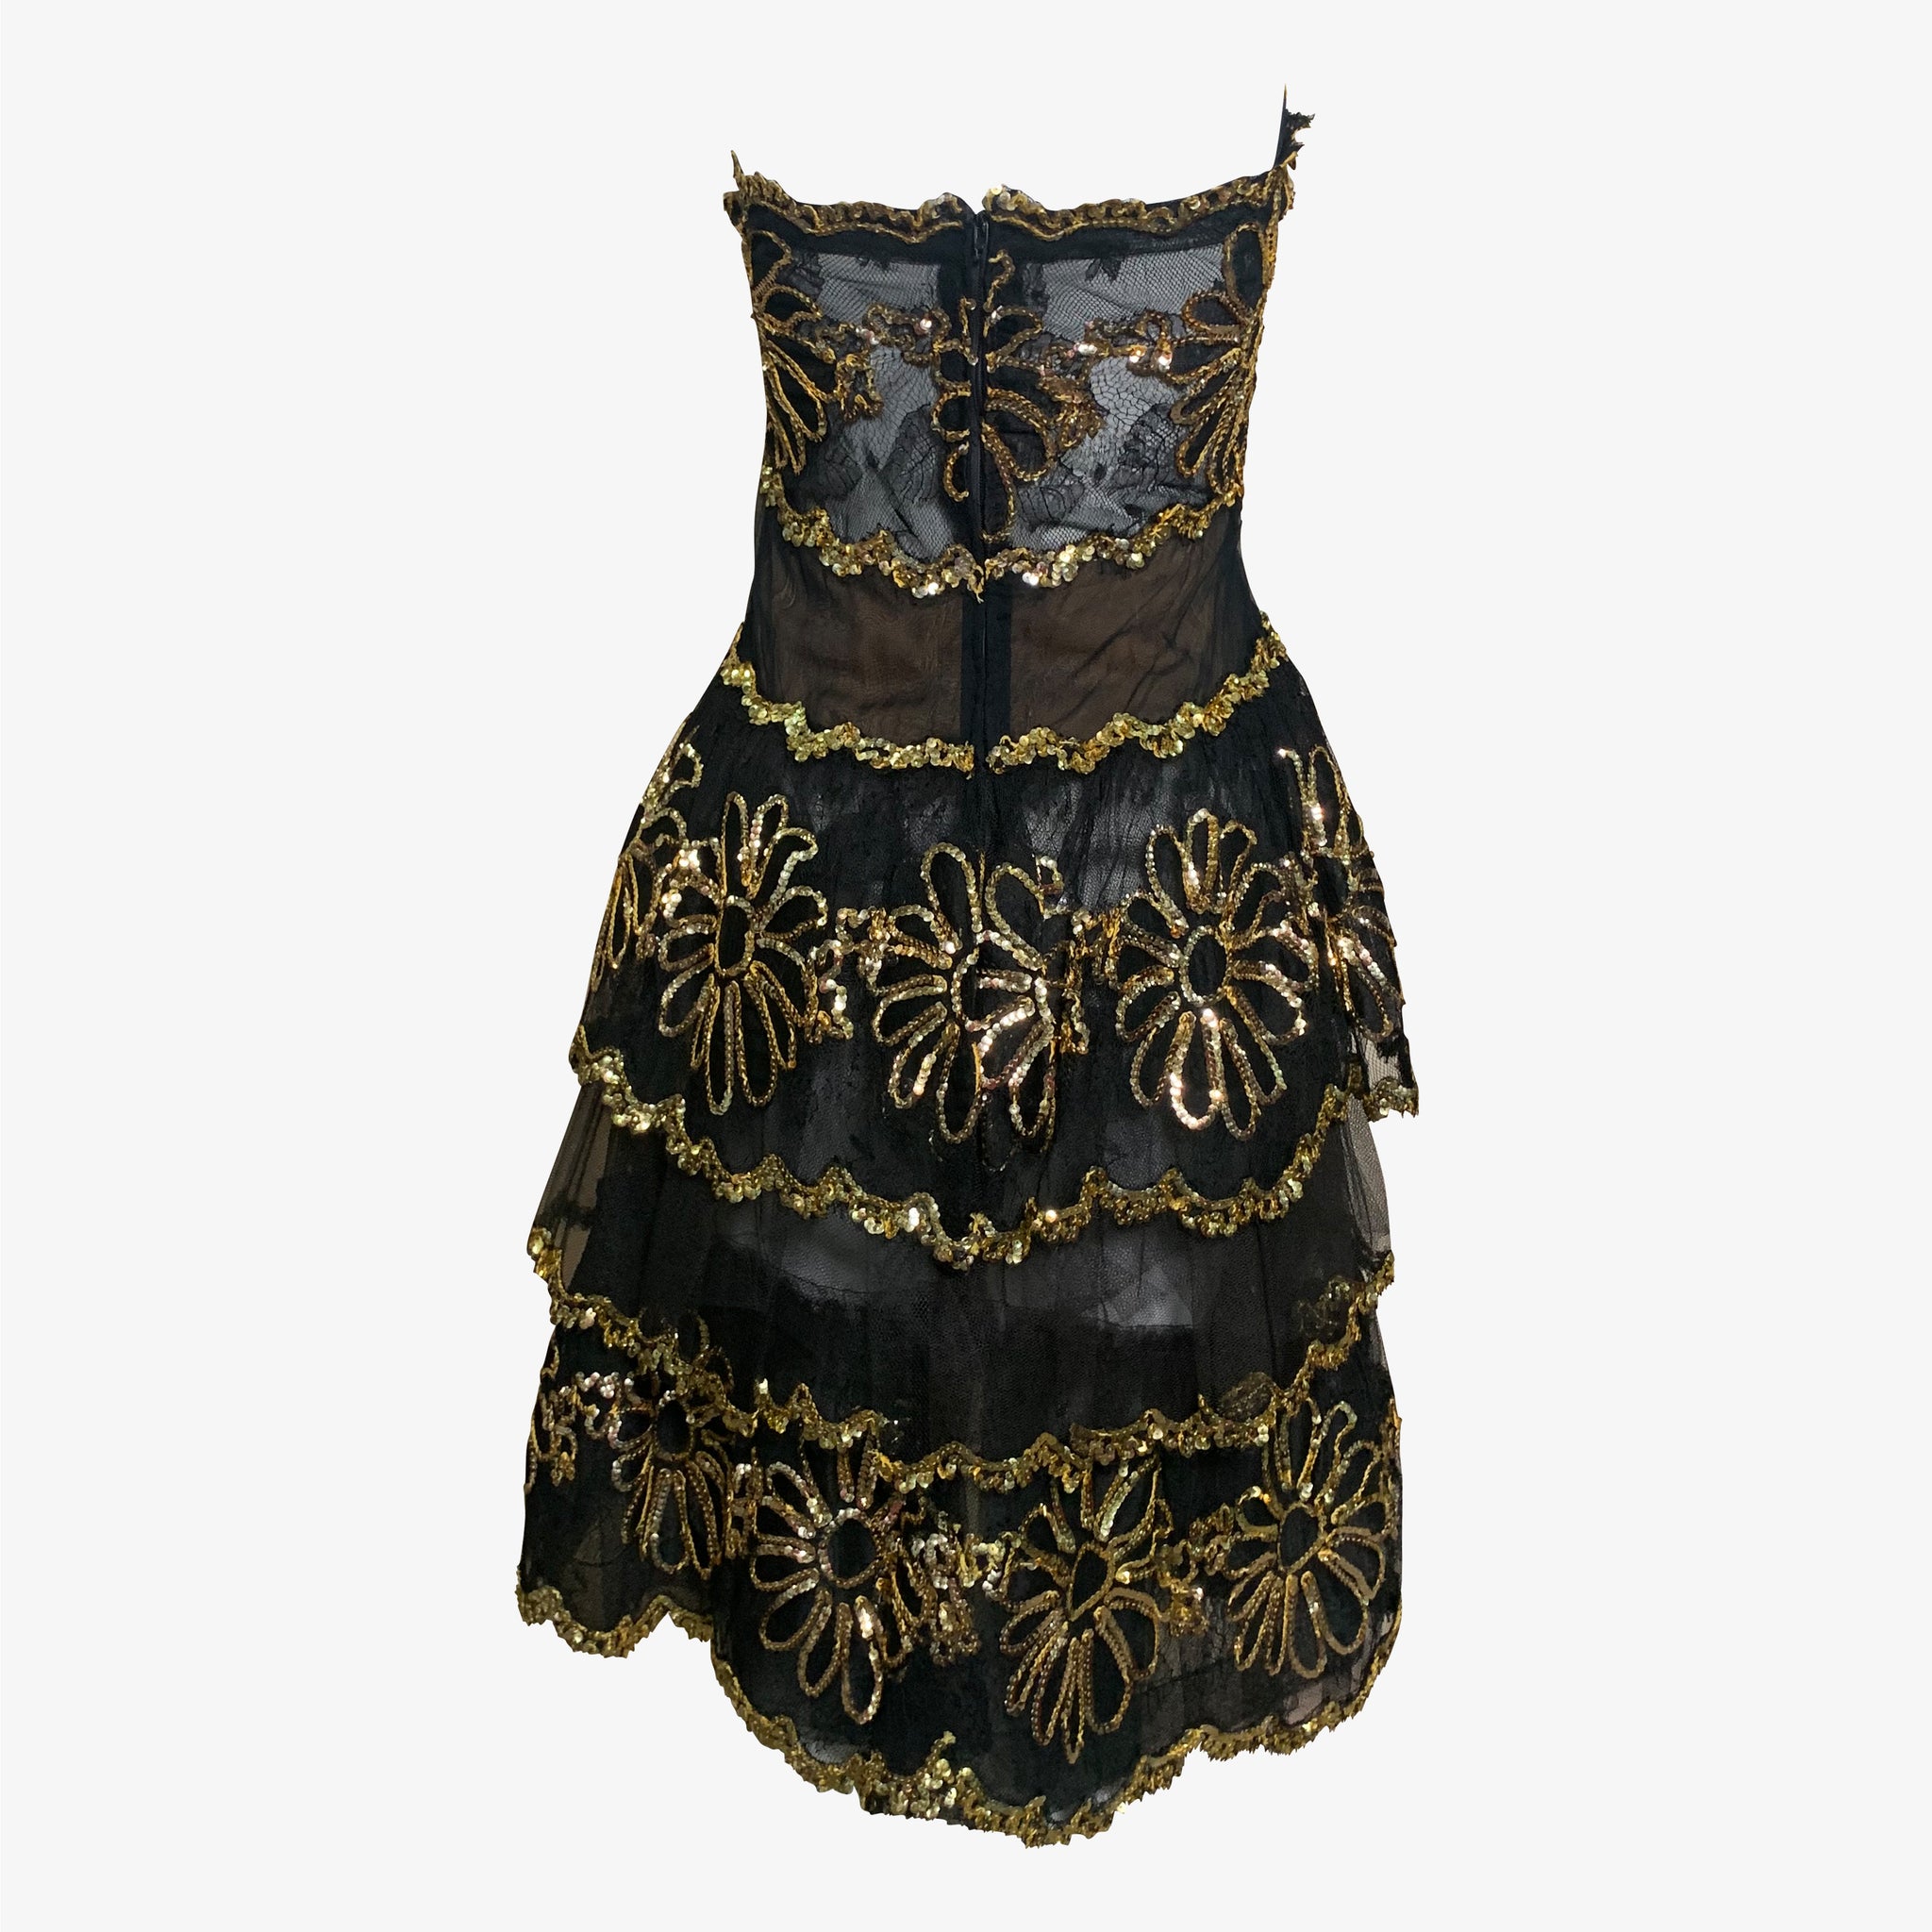 80s Black & Gold Sheer Strapless Embroidered Cocktail Dress, back